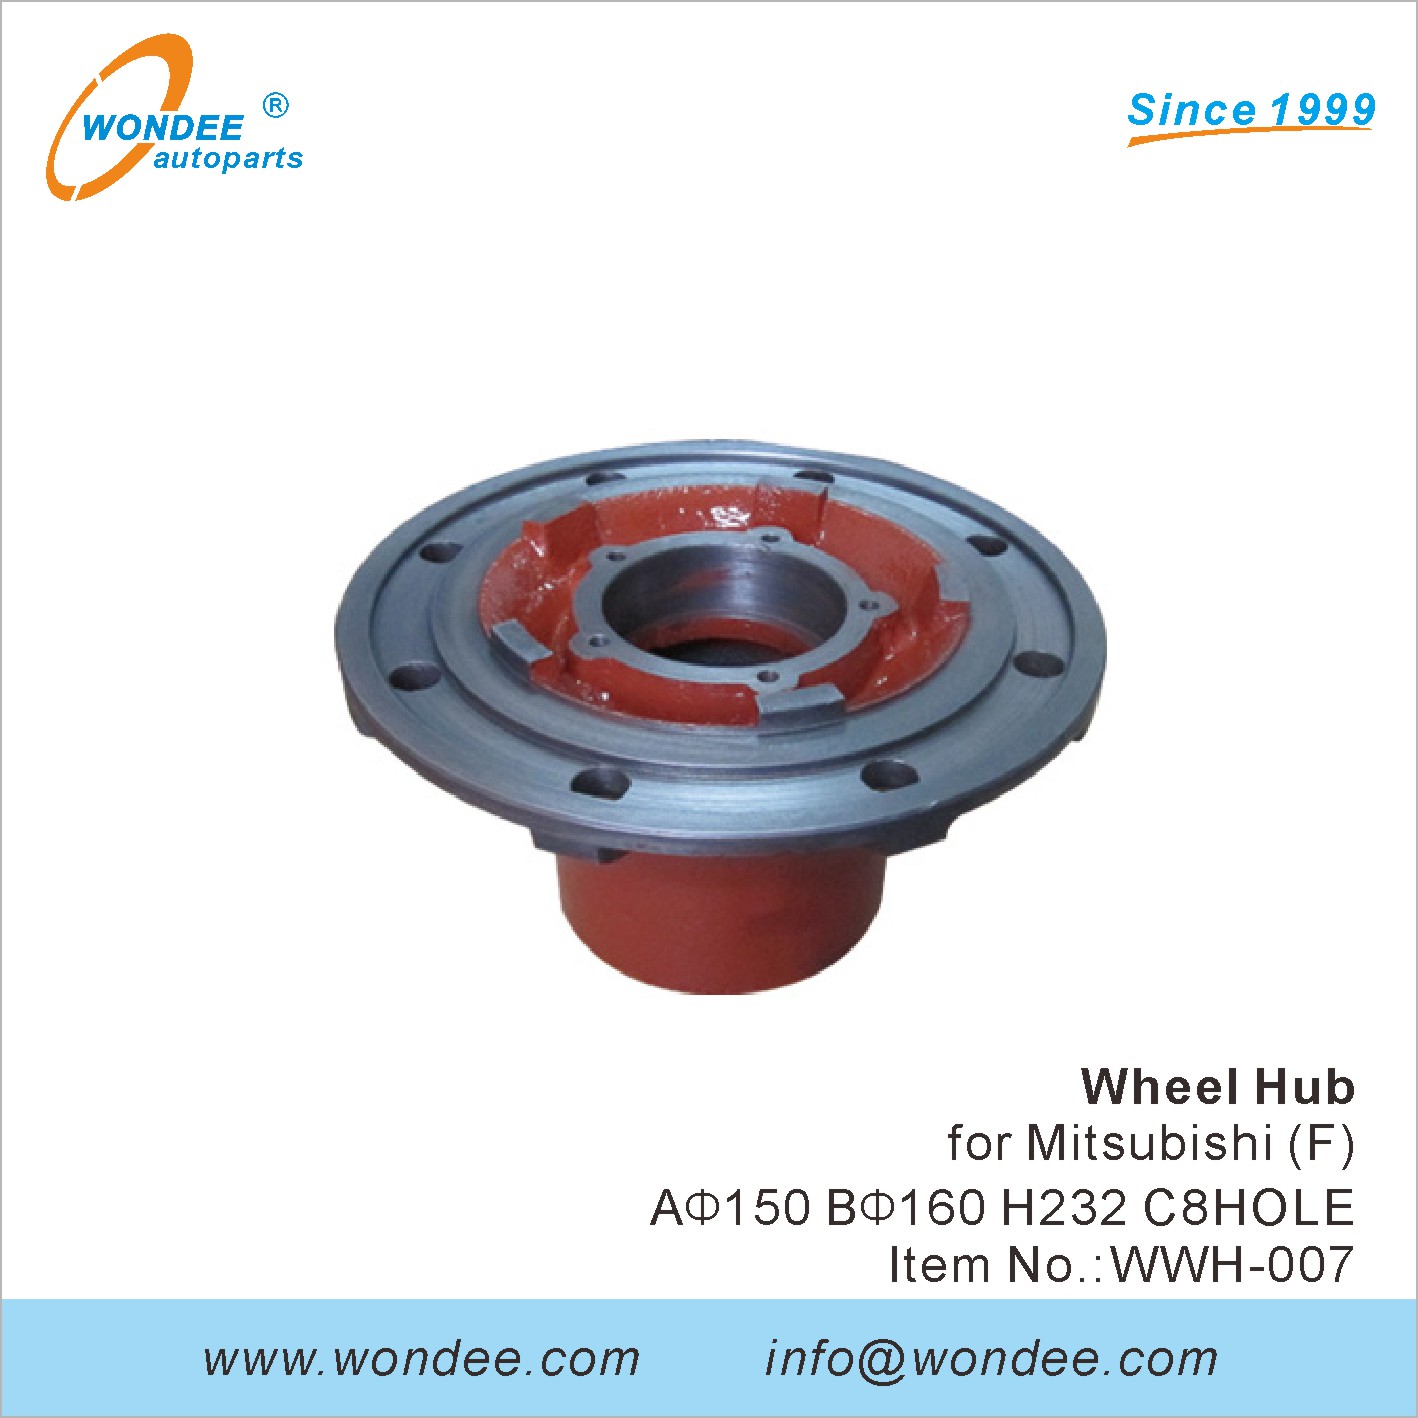 WONDEE wheel hub (7)